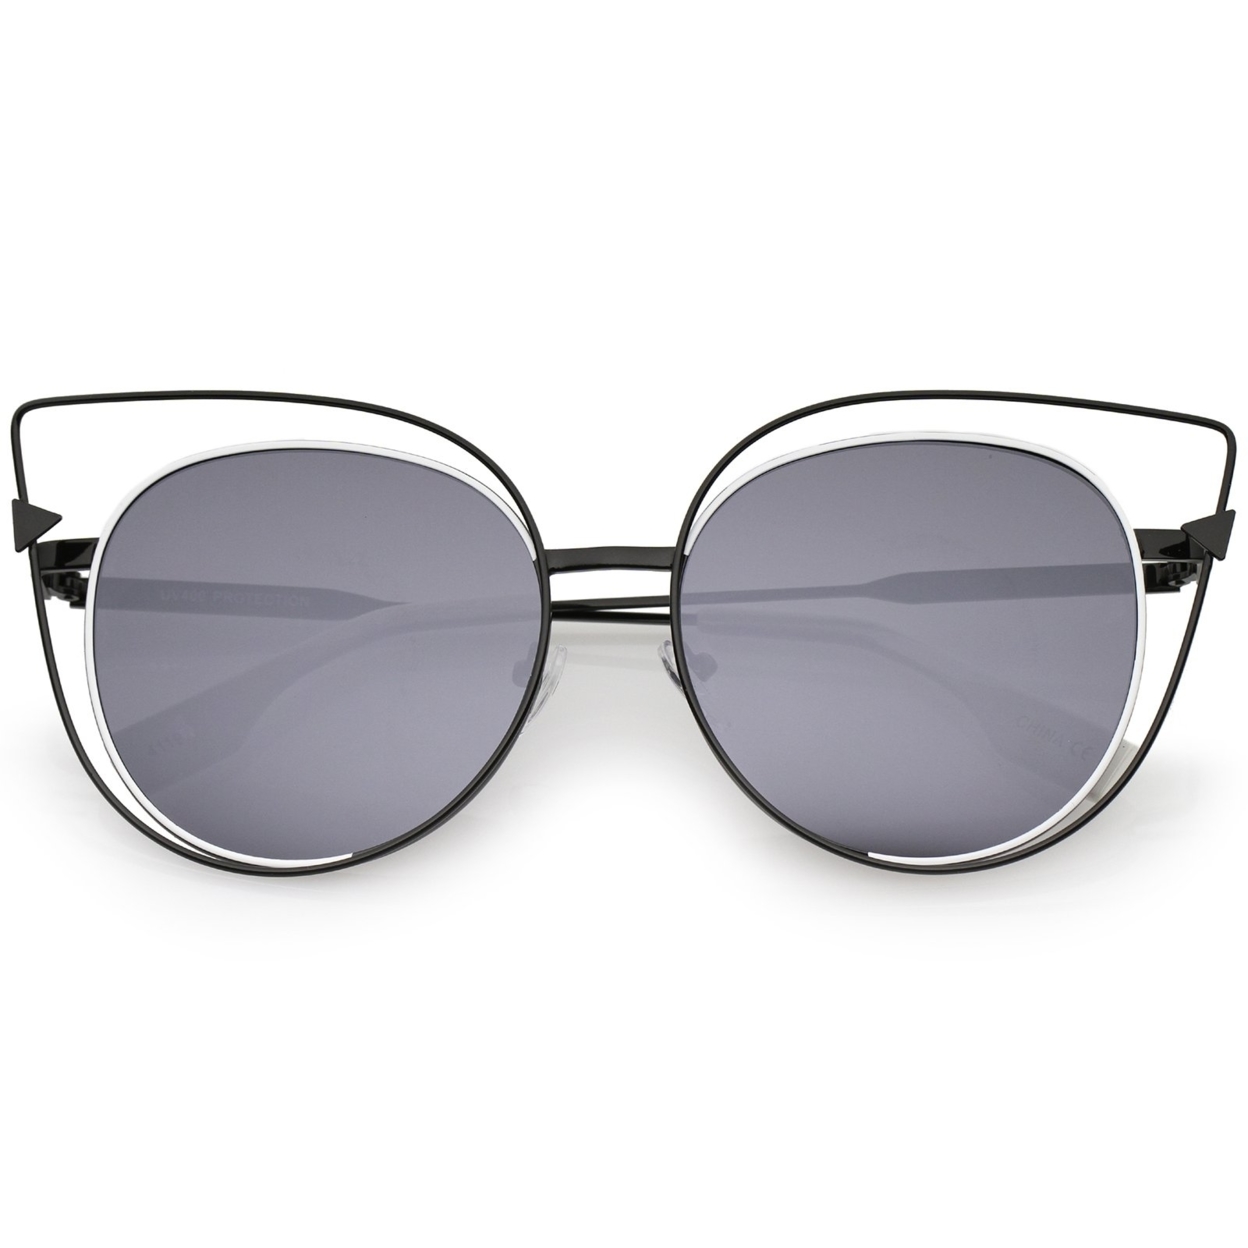 Oversize Metal Cutout Frame Arrow Accent Flat Lens Cat Eye Sunglasses 57mm - Black-White / Smoke